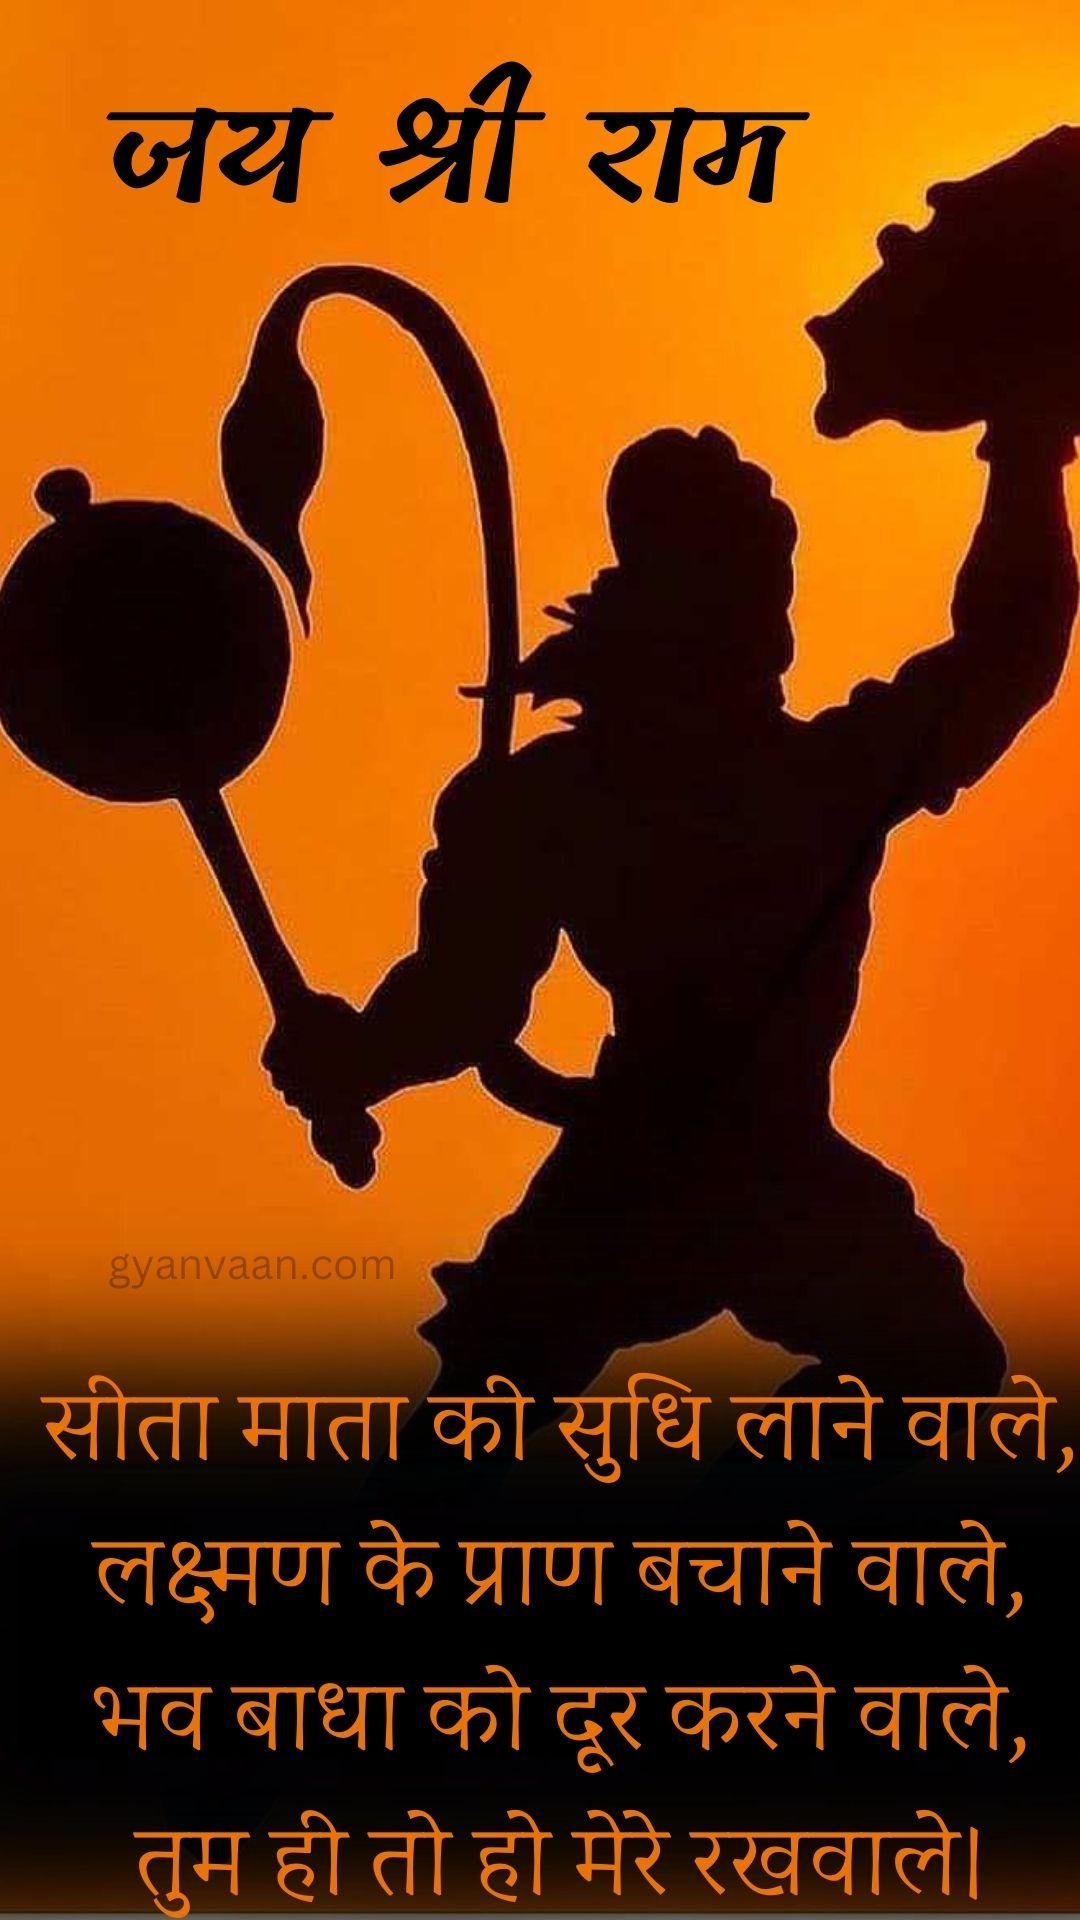 Hanuman Quotes Shayari And Whatsapp Status For Mobile With Hanuman Images And Photos 33 - Hanuman Images